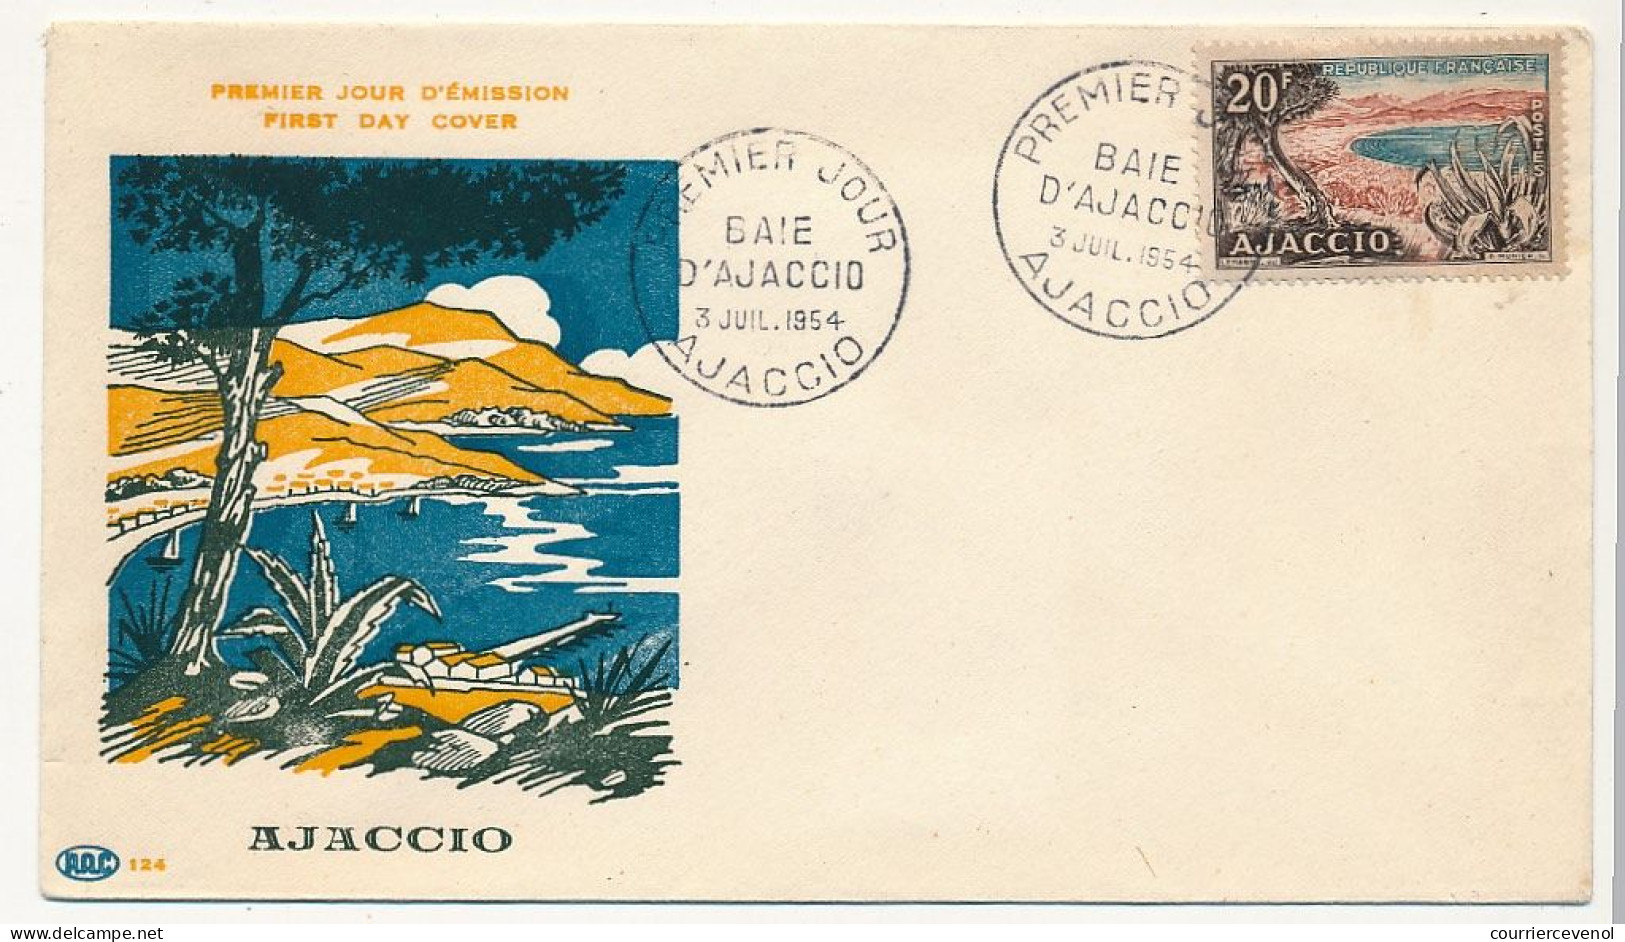 FRANCE => FDC 20F Baie D'Ajaccio - 3 Juillet 1954 - 1950-1959